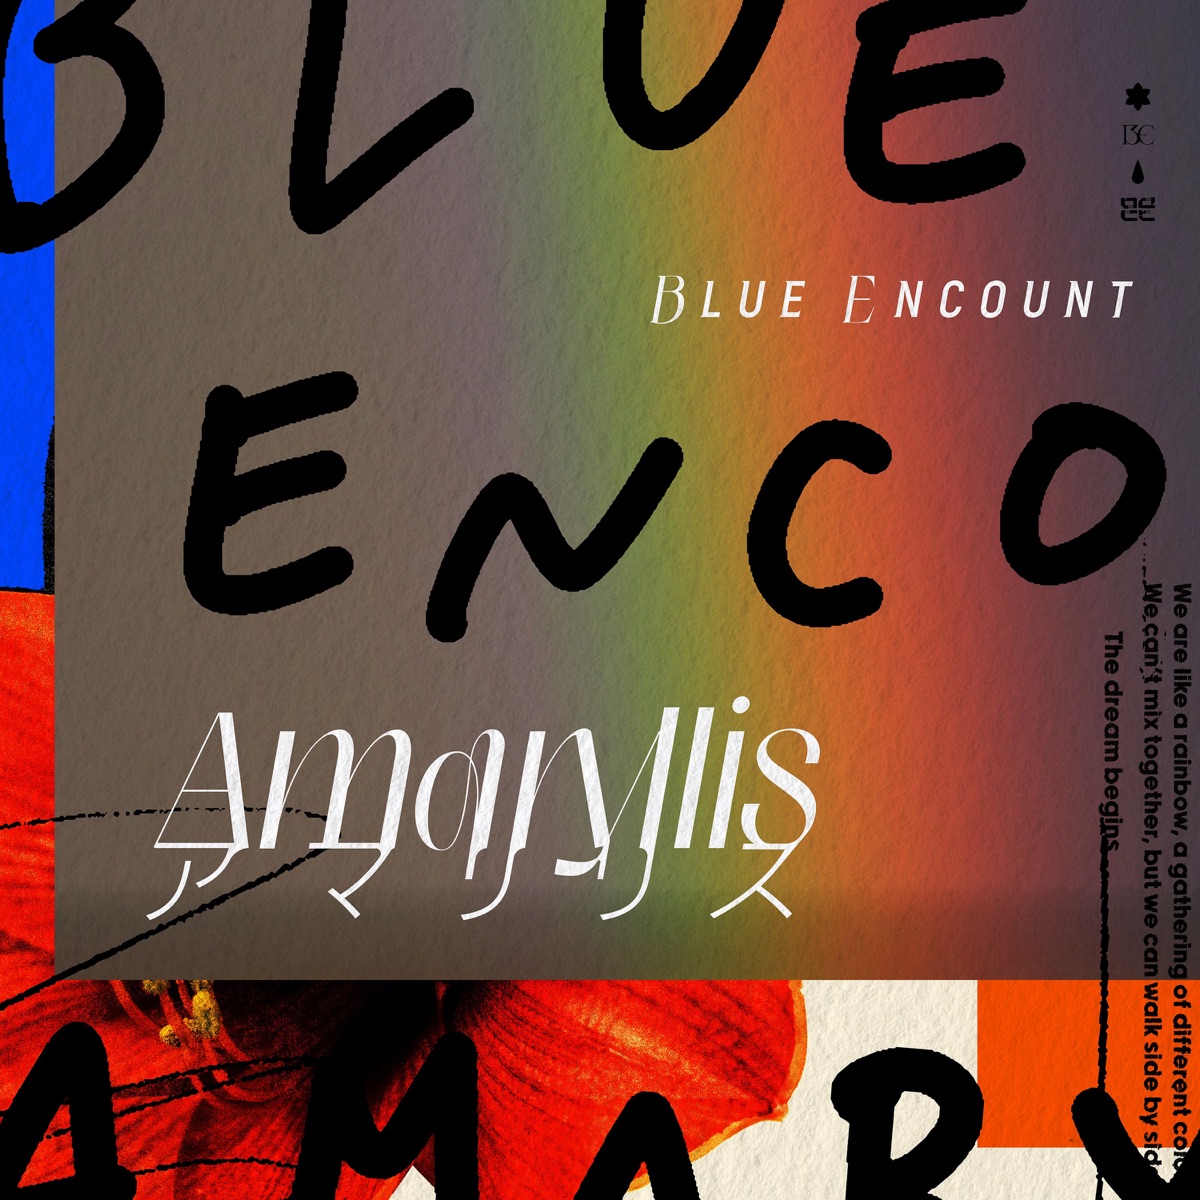 『BLUE ENCOUNT - アマリリス』収録の『アマリリス』ジャケット